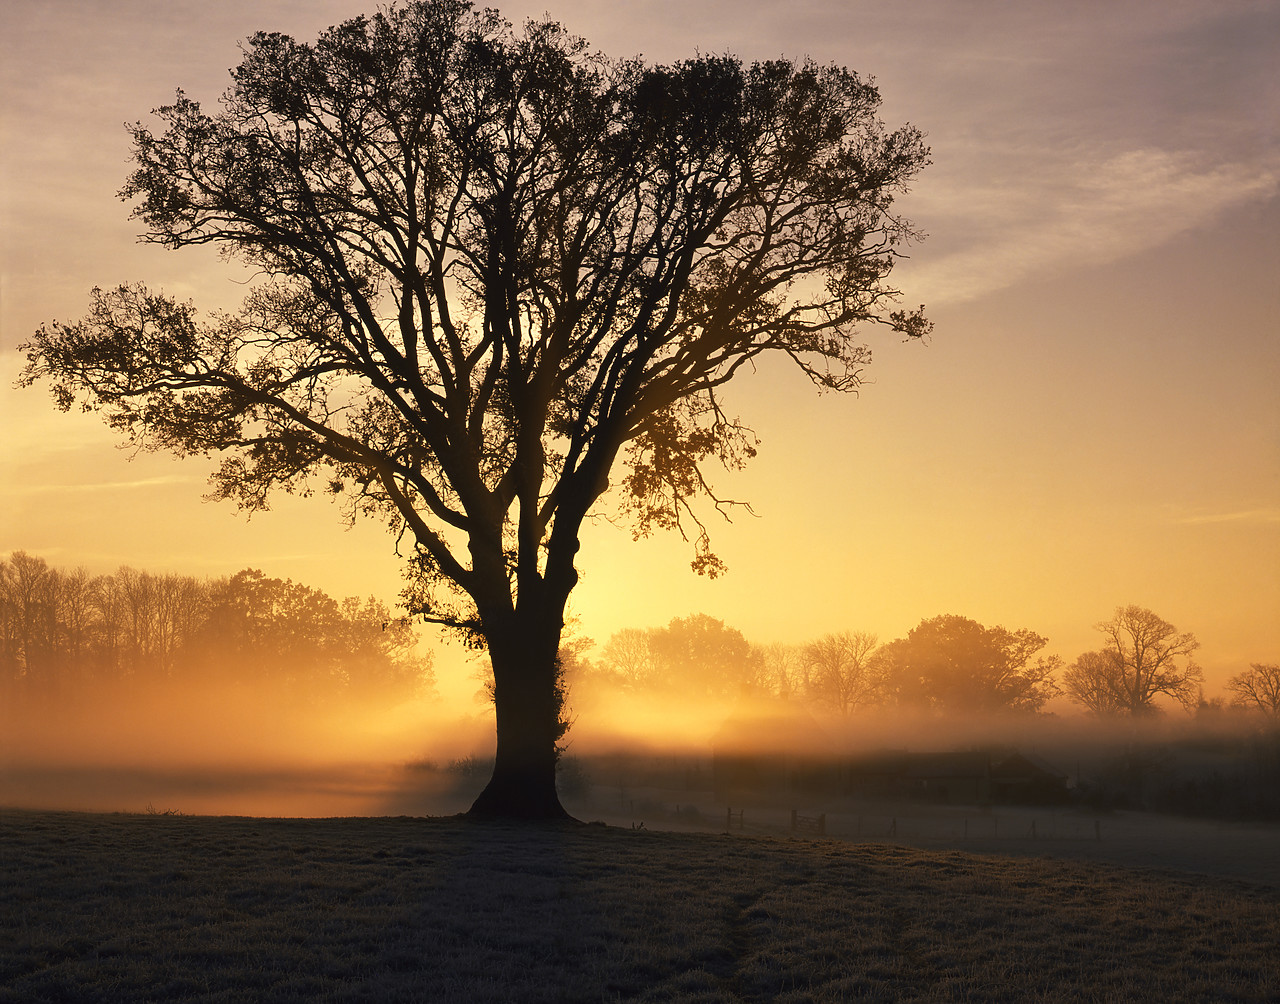 #892591-3 - Sunrise over Farm in Mist, Surlingham, Norfolk, England